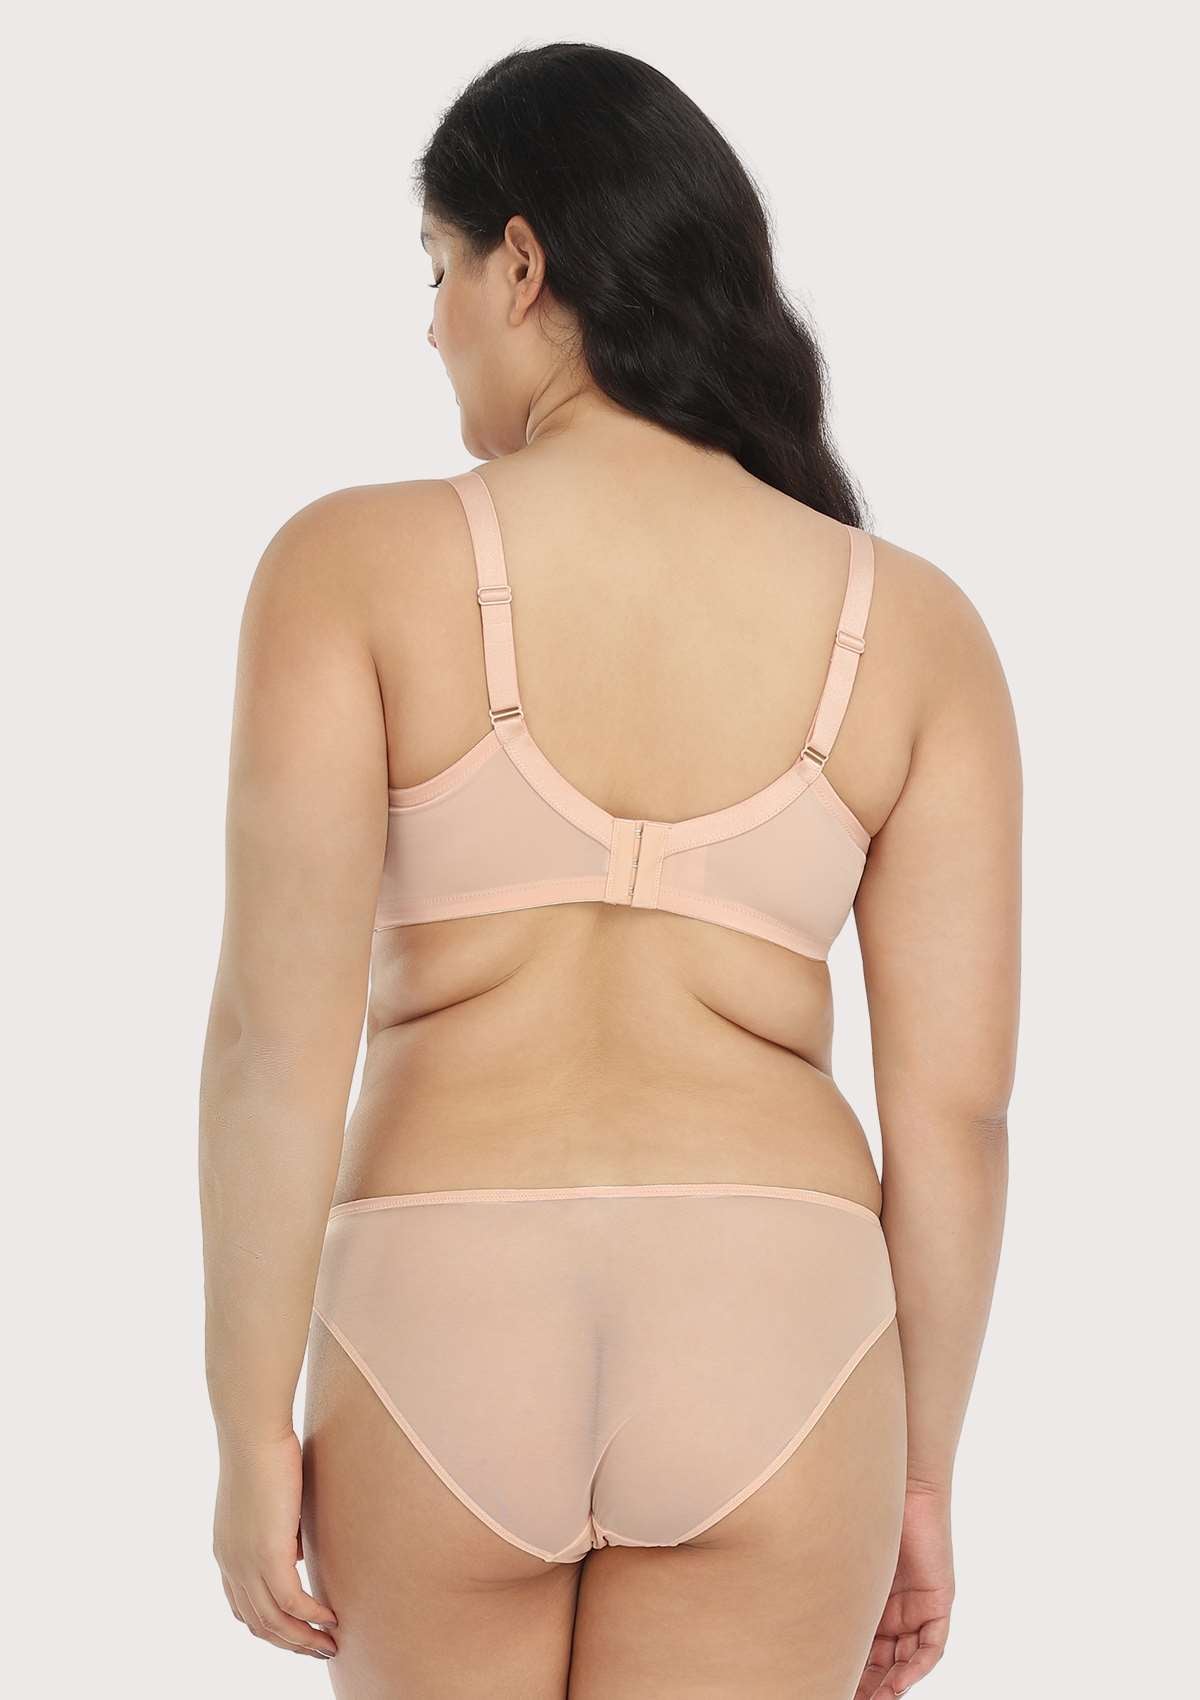 HSIA Sunflower Matching Bra And Panties Set: Comfortable Plus Size Bra - Pink / 38 / G